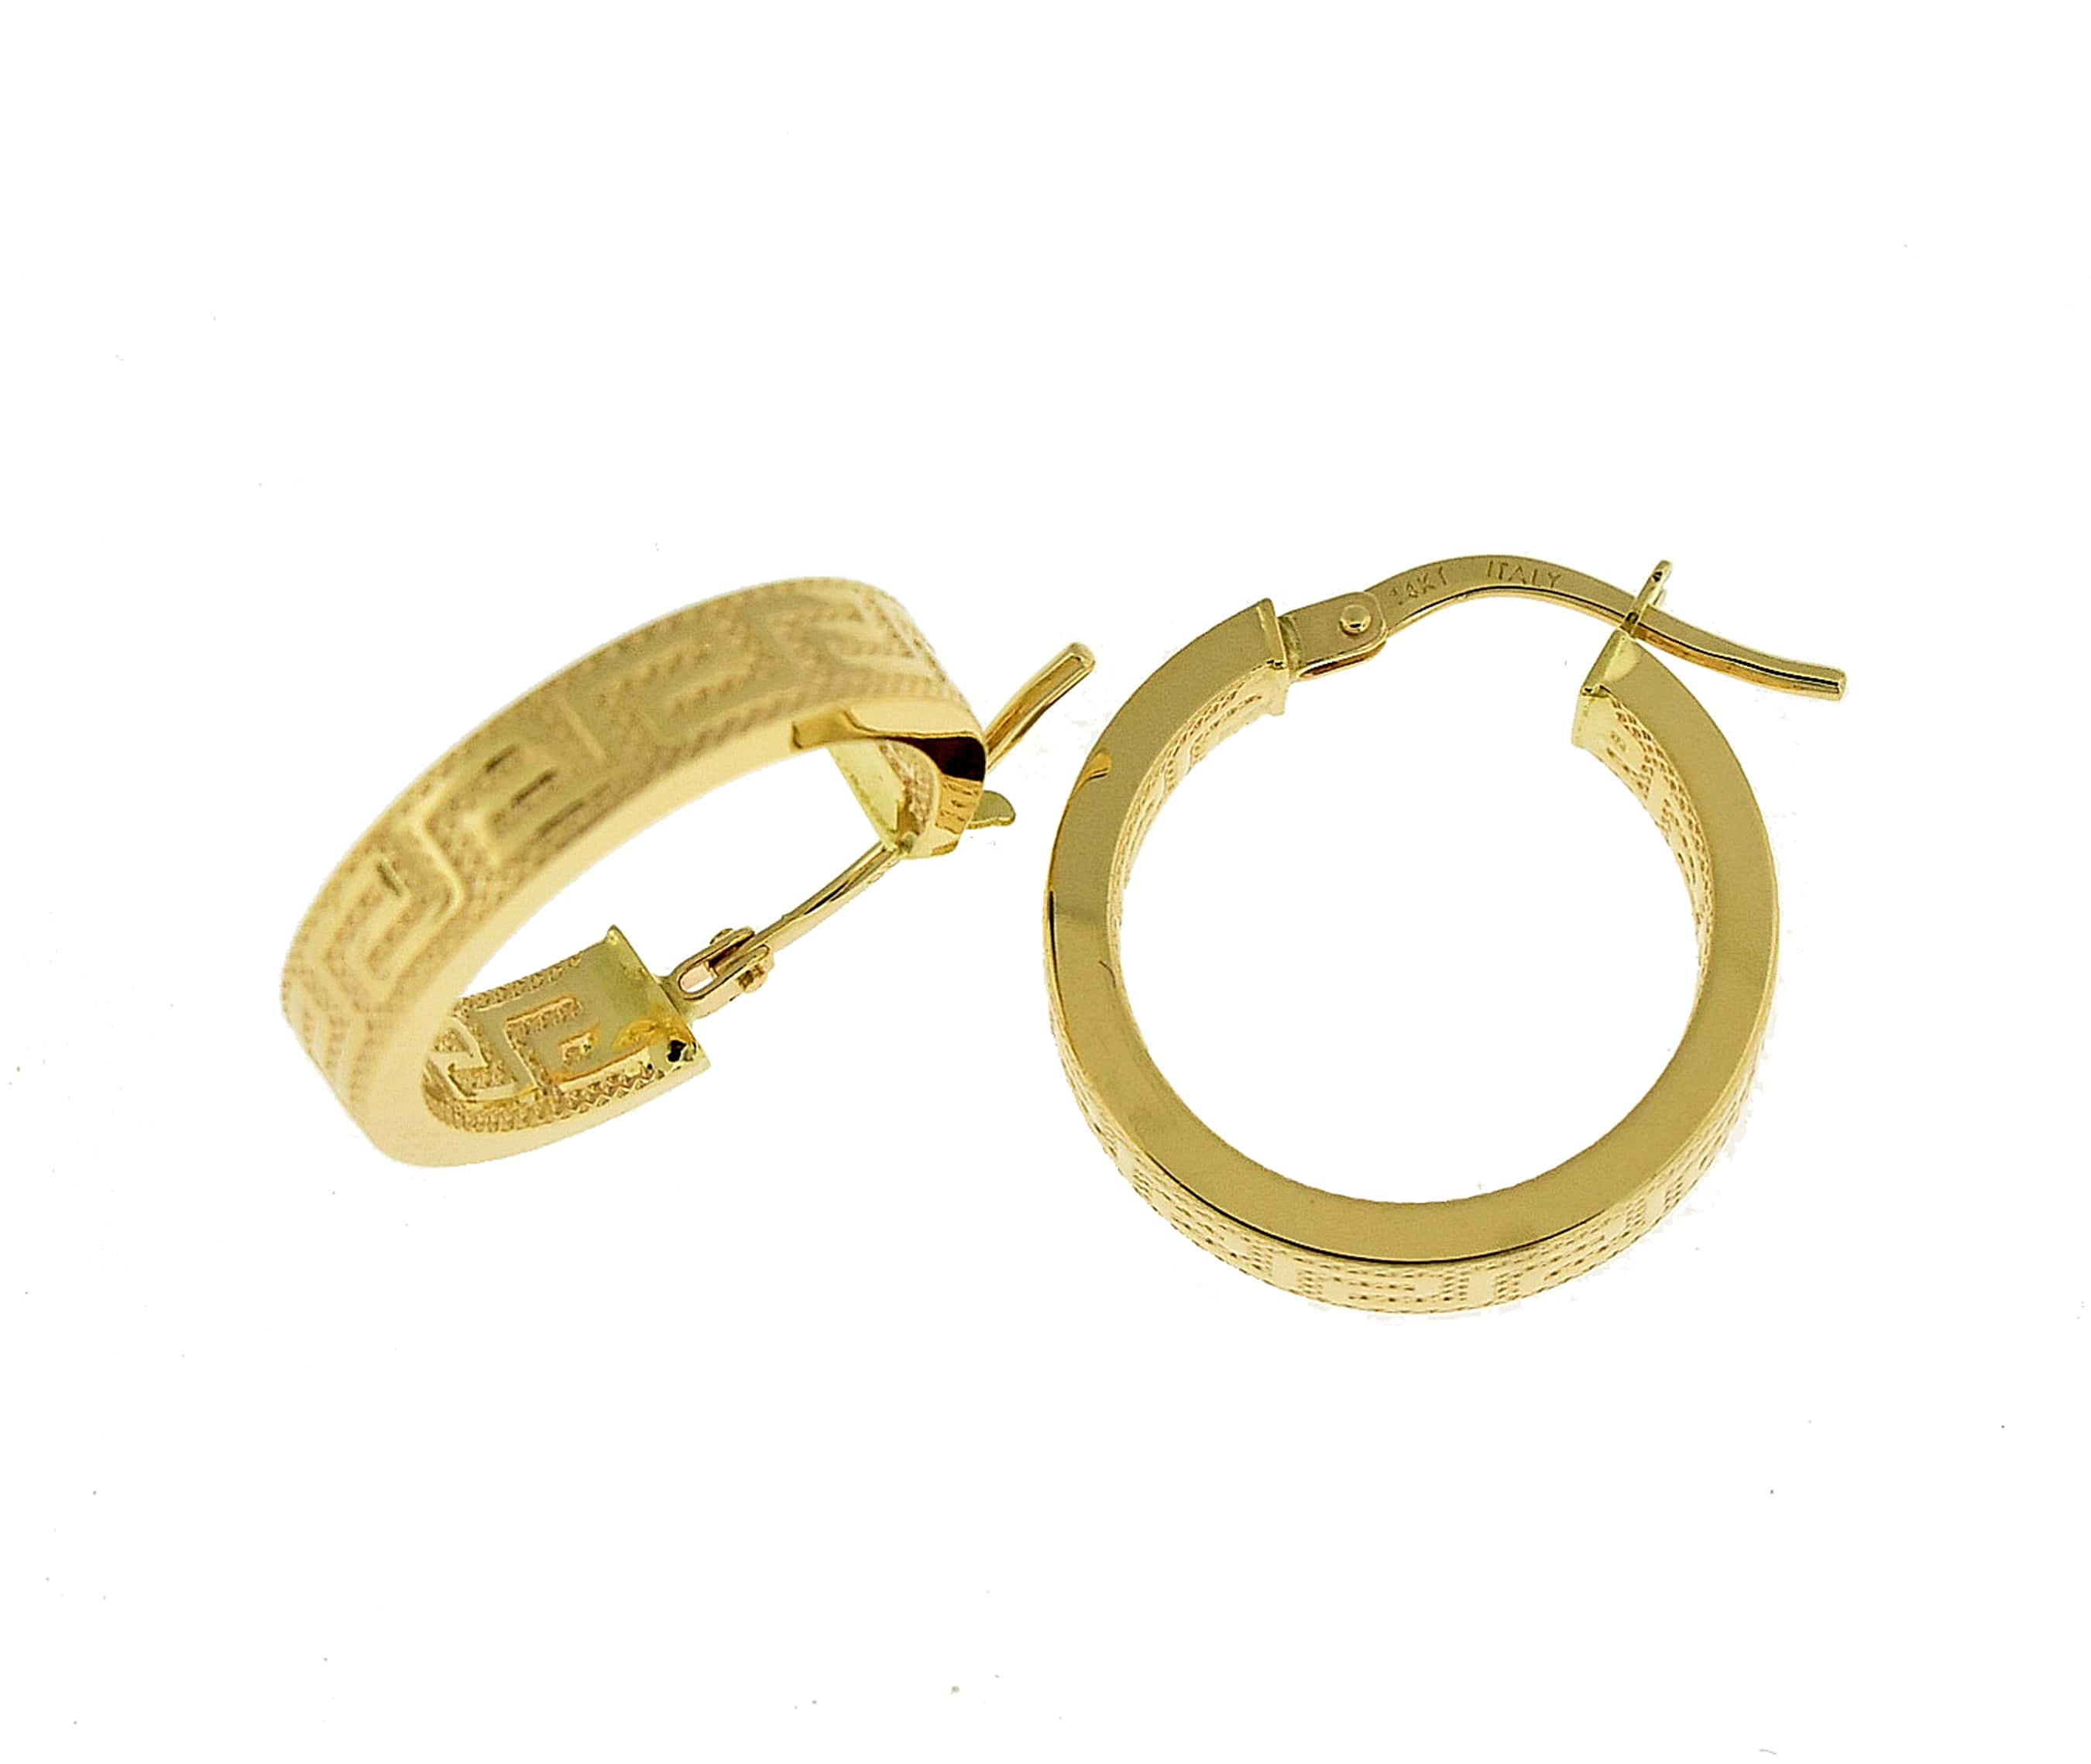 14k Yellow Gold Greek Key Square Tube Round Hoop Earrings